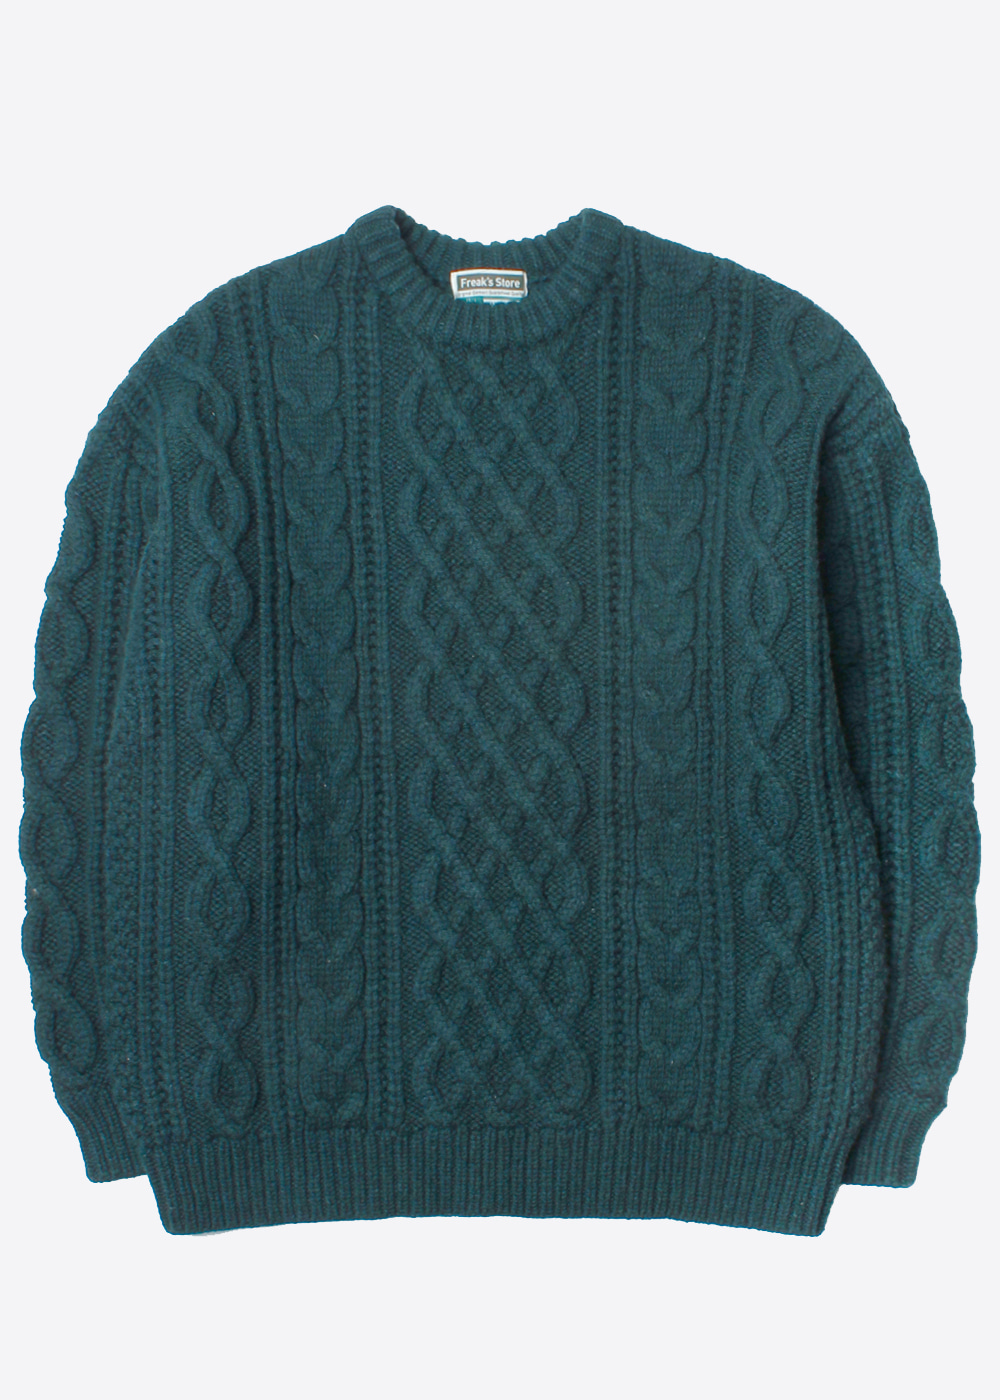 FREAK’S STORE‘over fit’ wool knit sweater